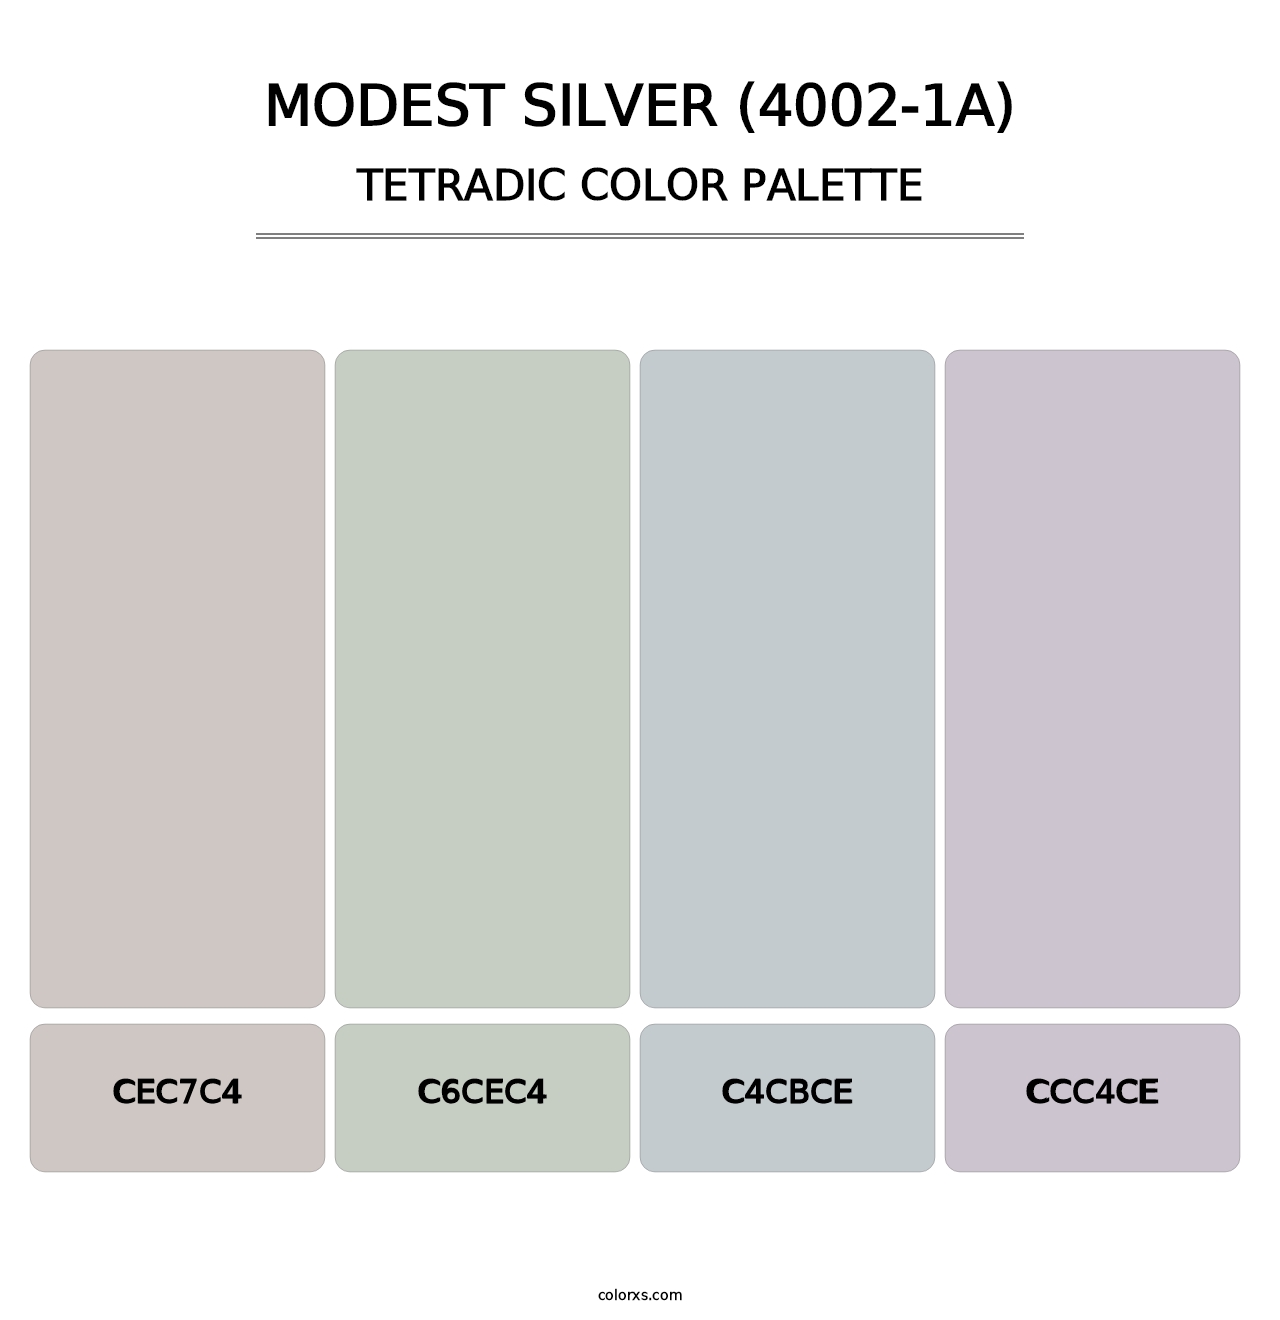 Modest Silver (4002-1A) - Tetradic Color Palette